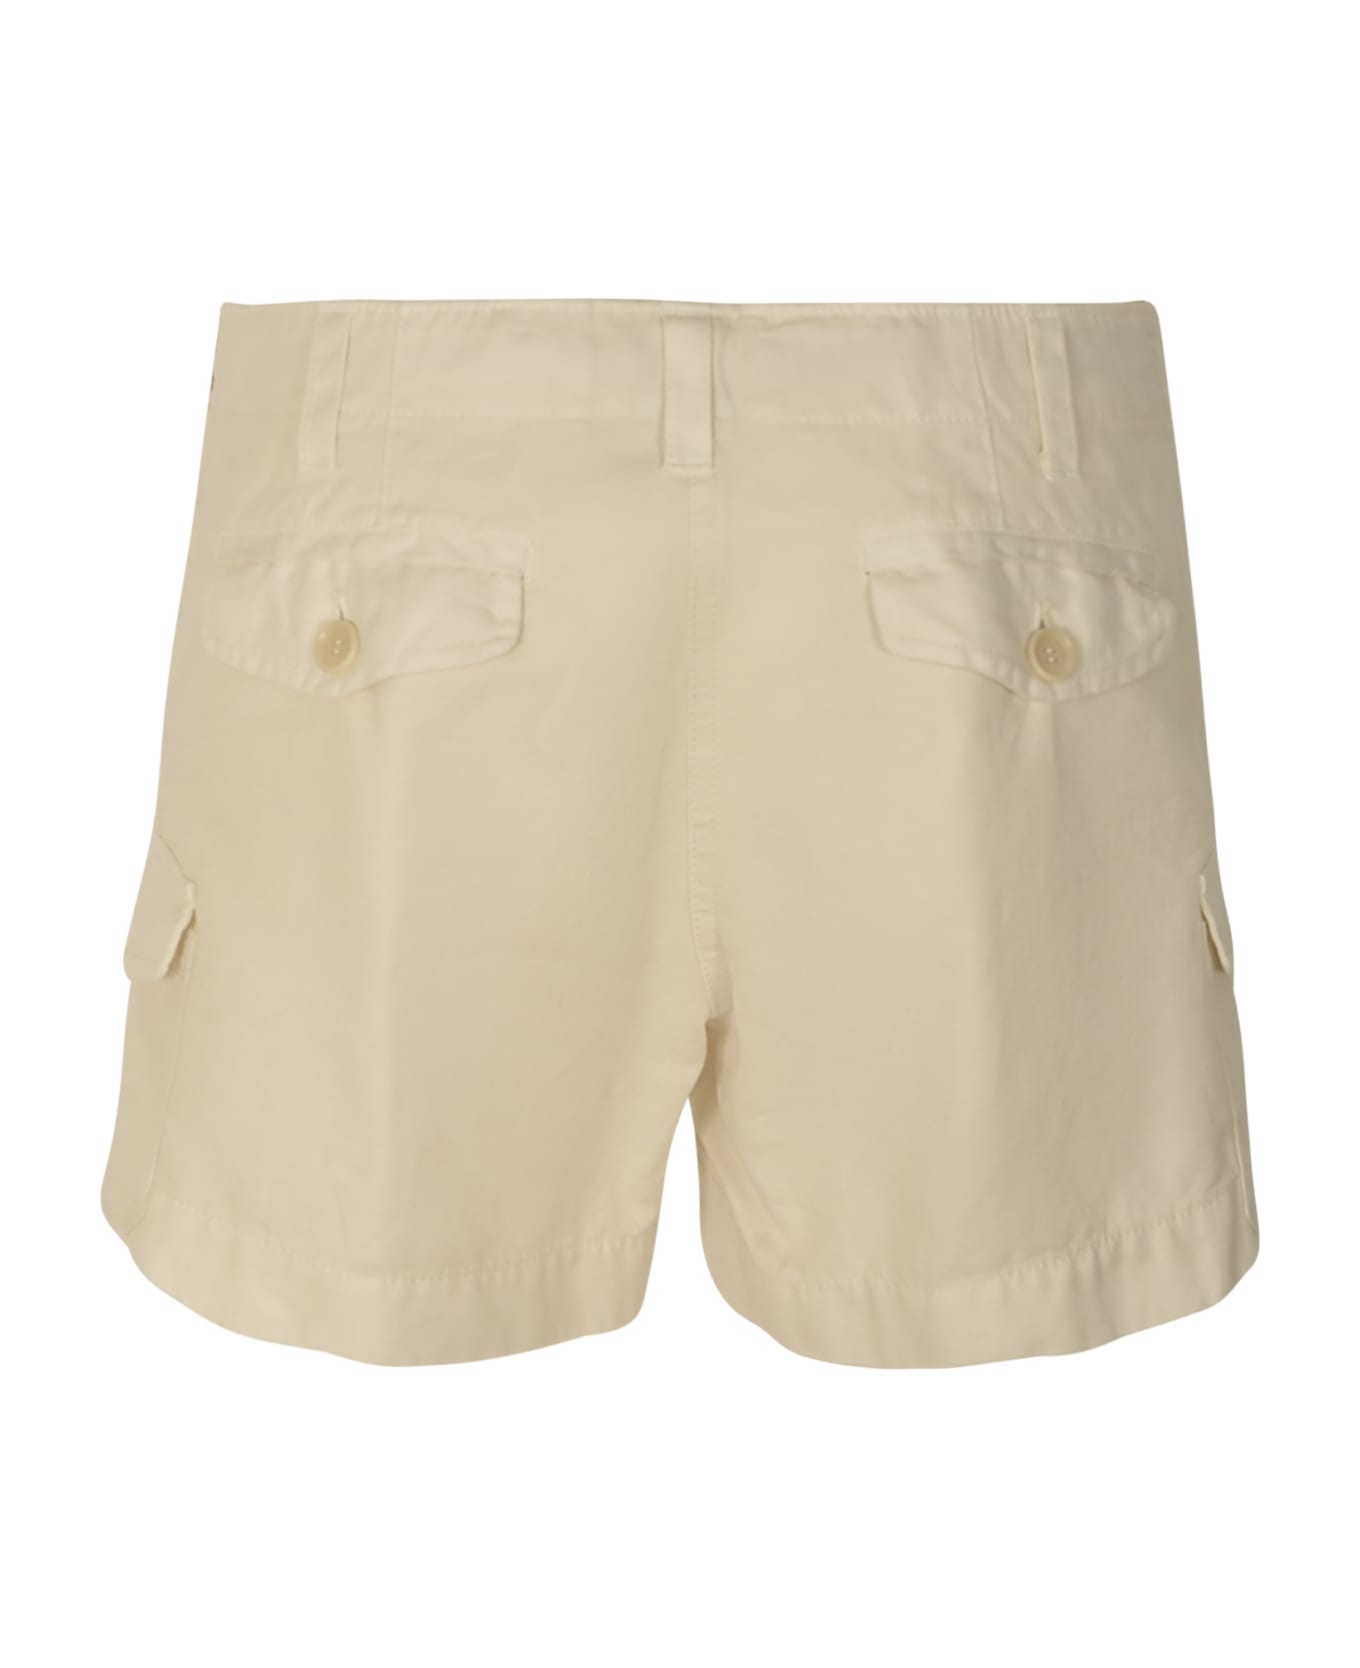 Aspesi Drawstring Waist Side Pockets Shorts - Natural